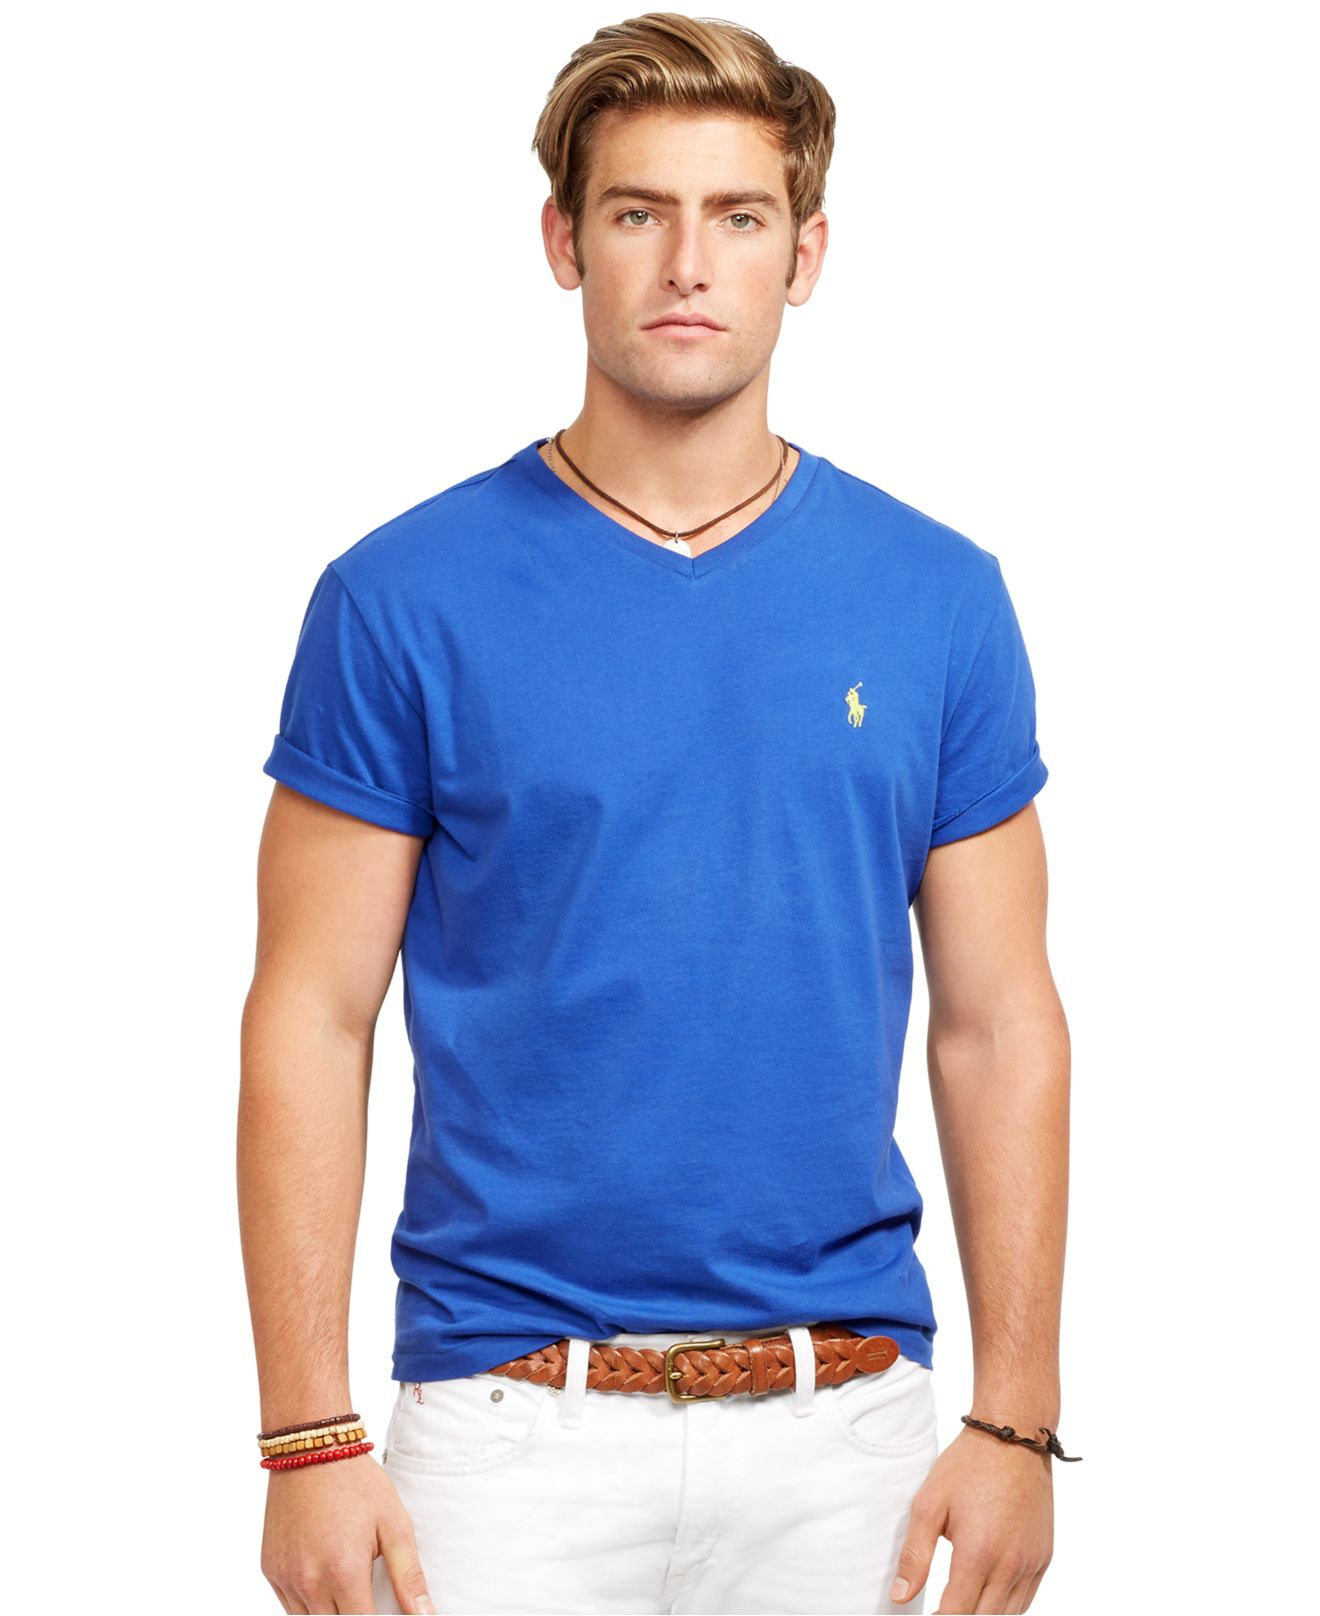 Lyst - Polo Ralph Lauren Jersey V-neck T-shirt in Blue for Men